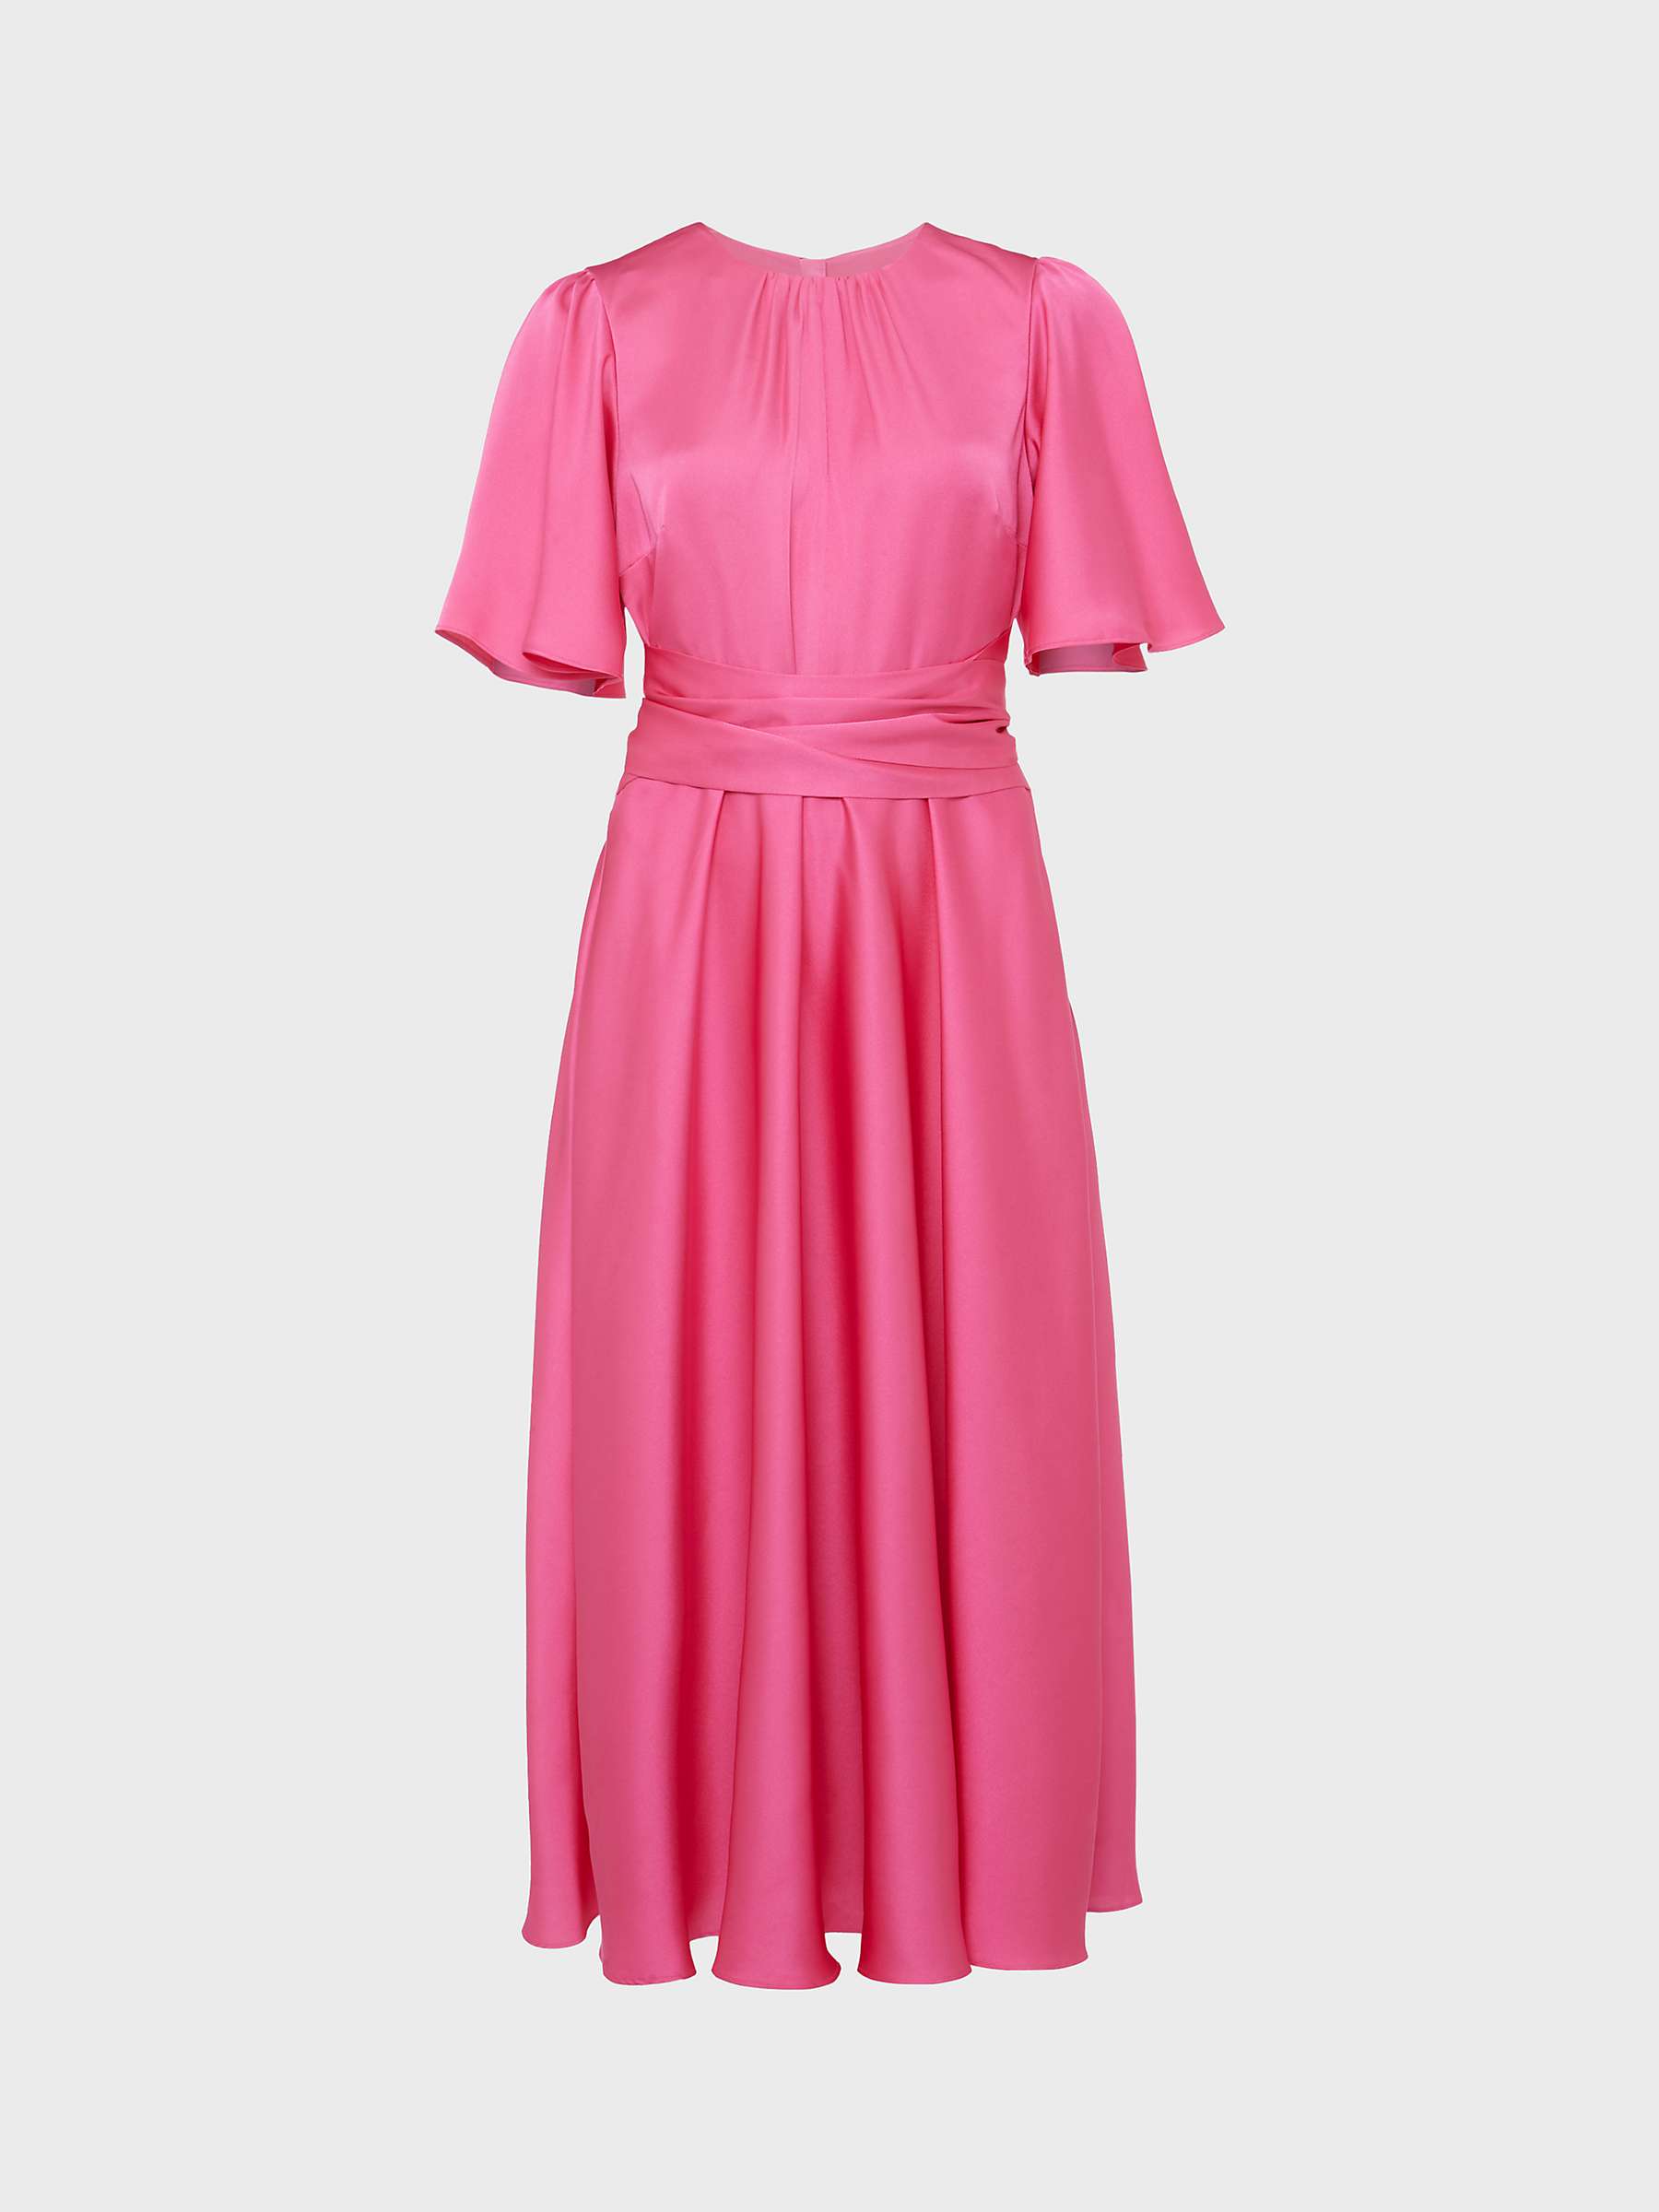 Hobbs Orelia Plain Dress, Party Pink at John Lewis & Partners